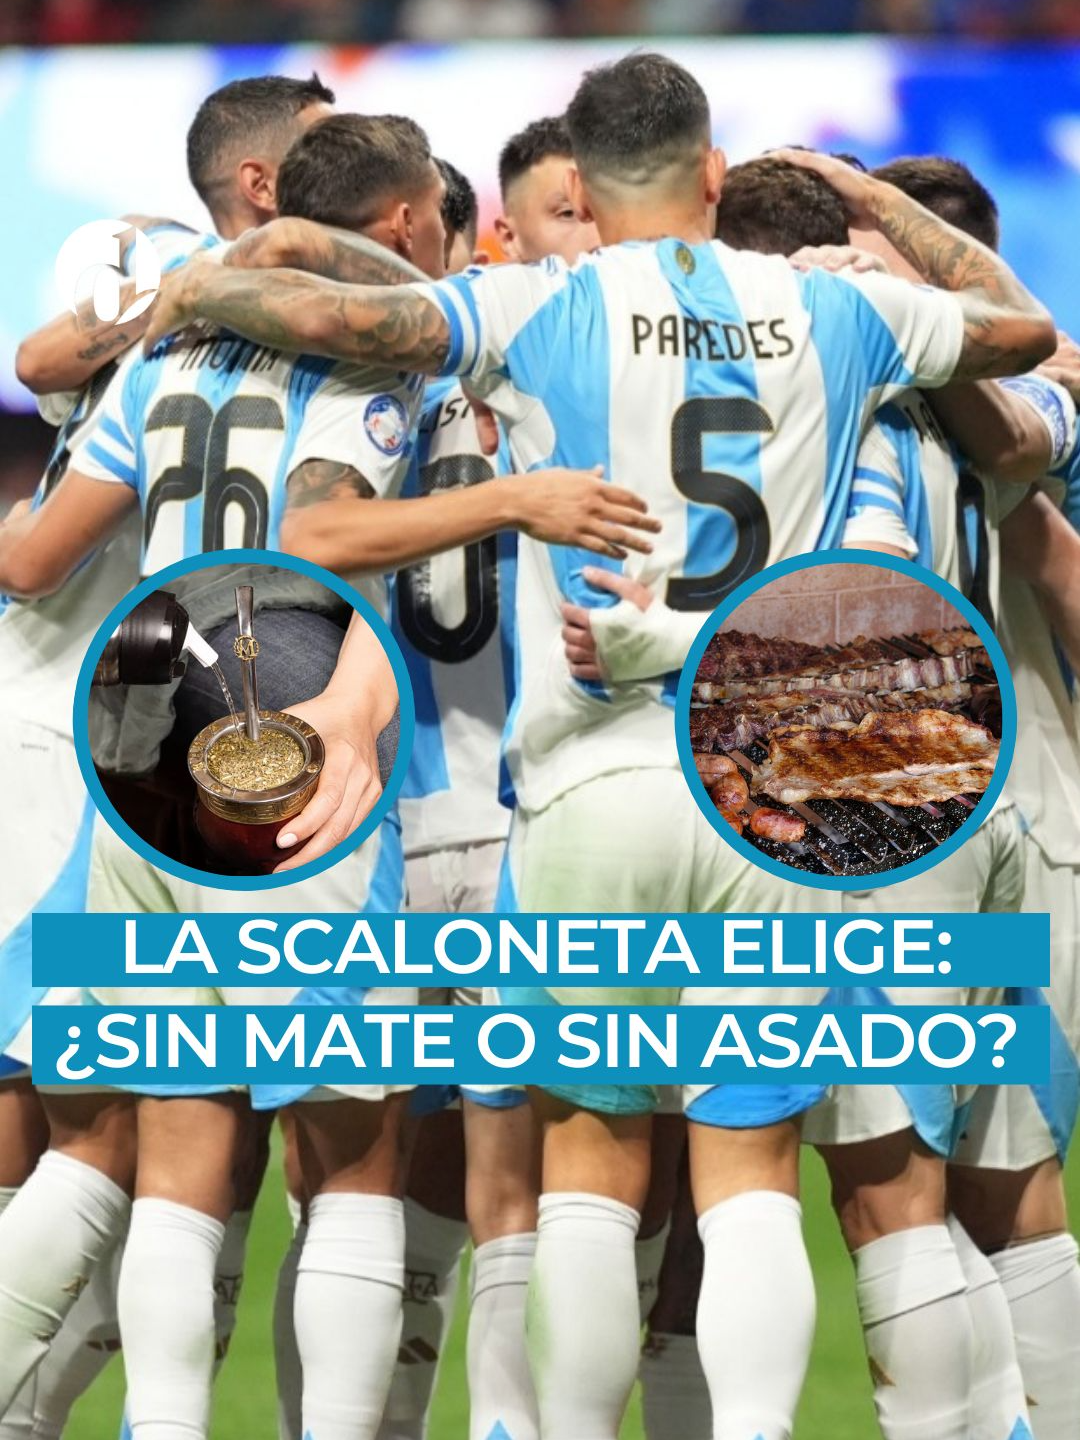 La Selección se enfrentó a una trivia muy difícil: ¿Sin #mate o sin #asado? 👀 #scaloneta #copaamerica #seleccionargentina